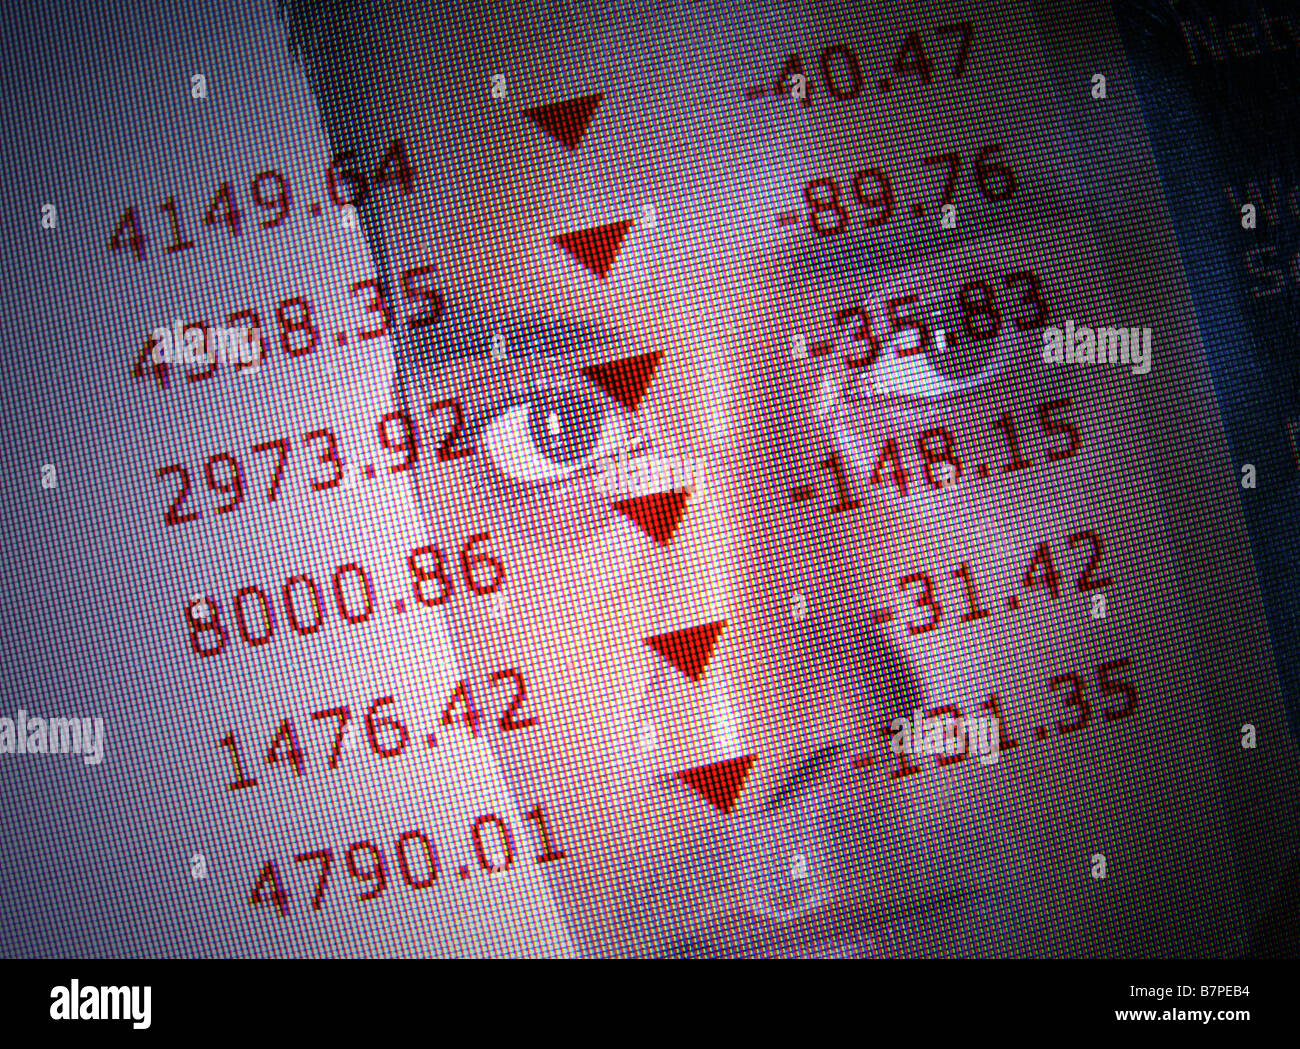 Businessman monitors falling stock markets Stock Photo